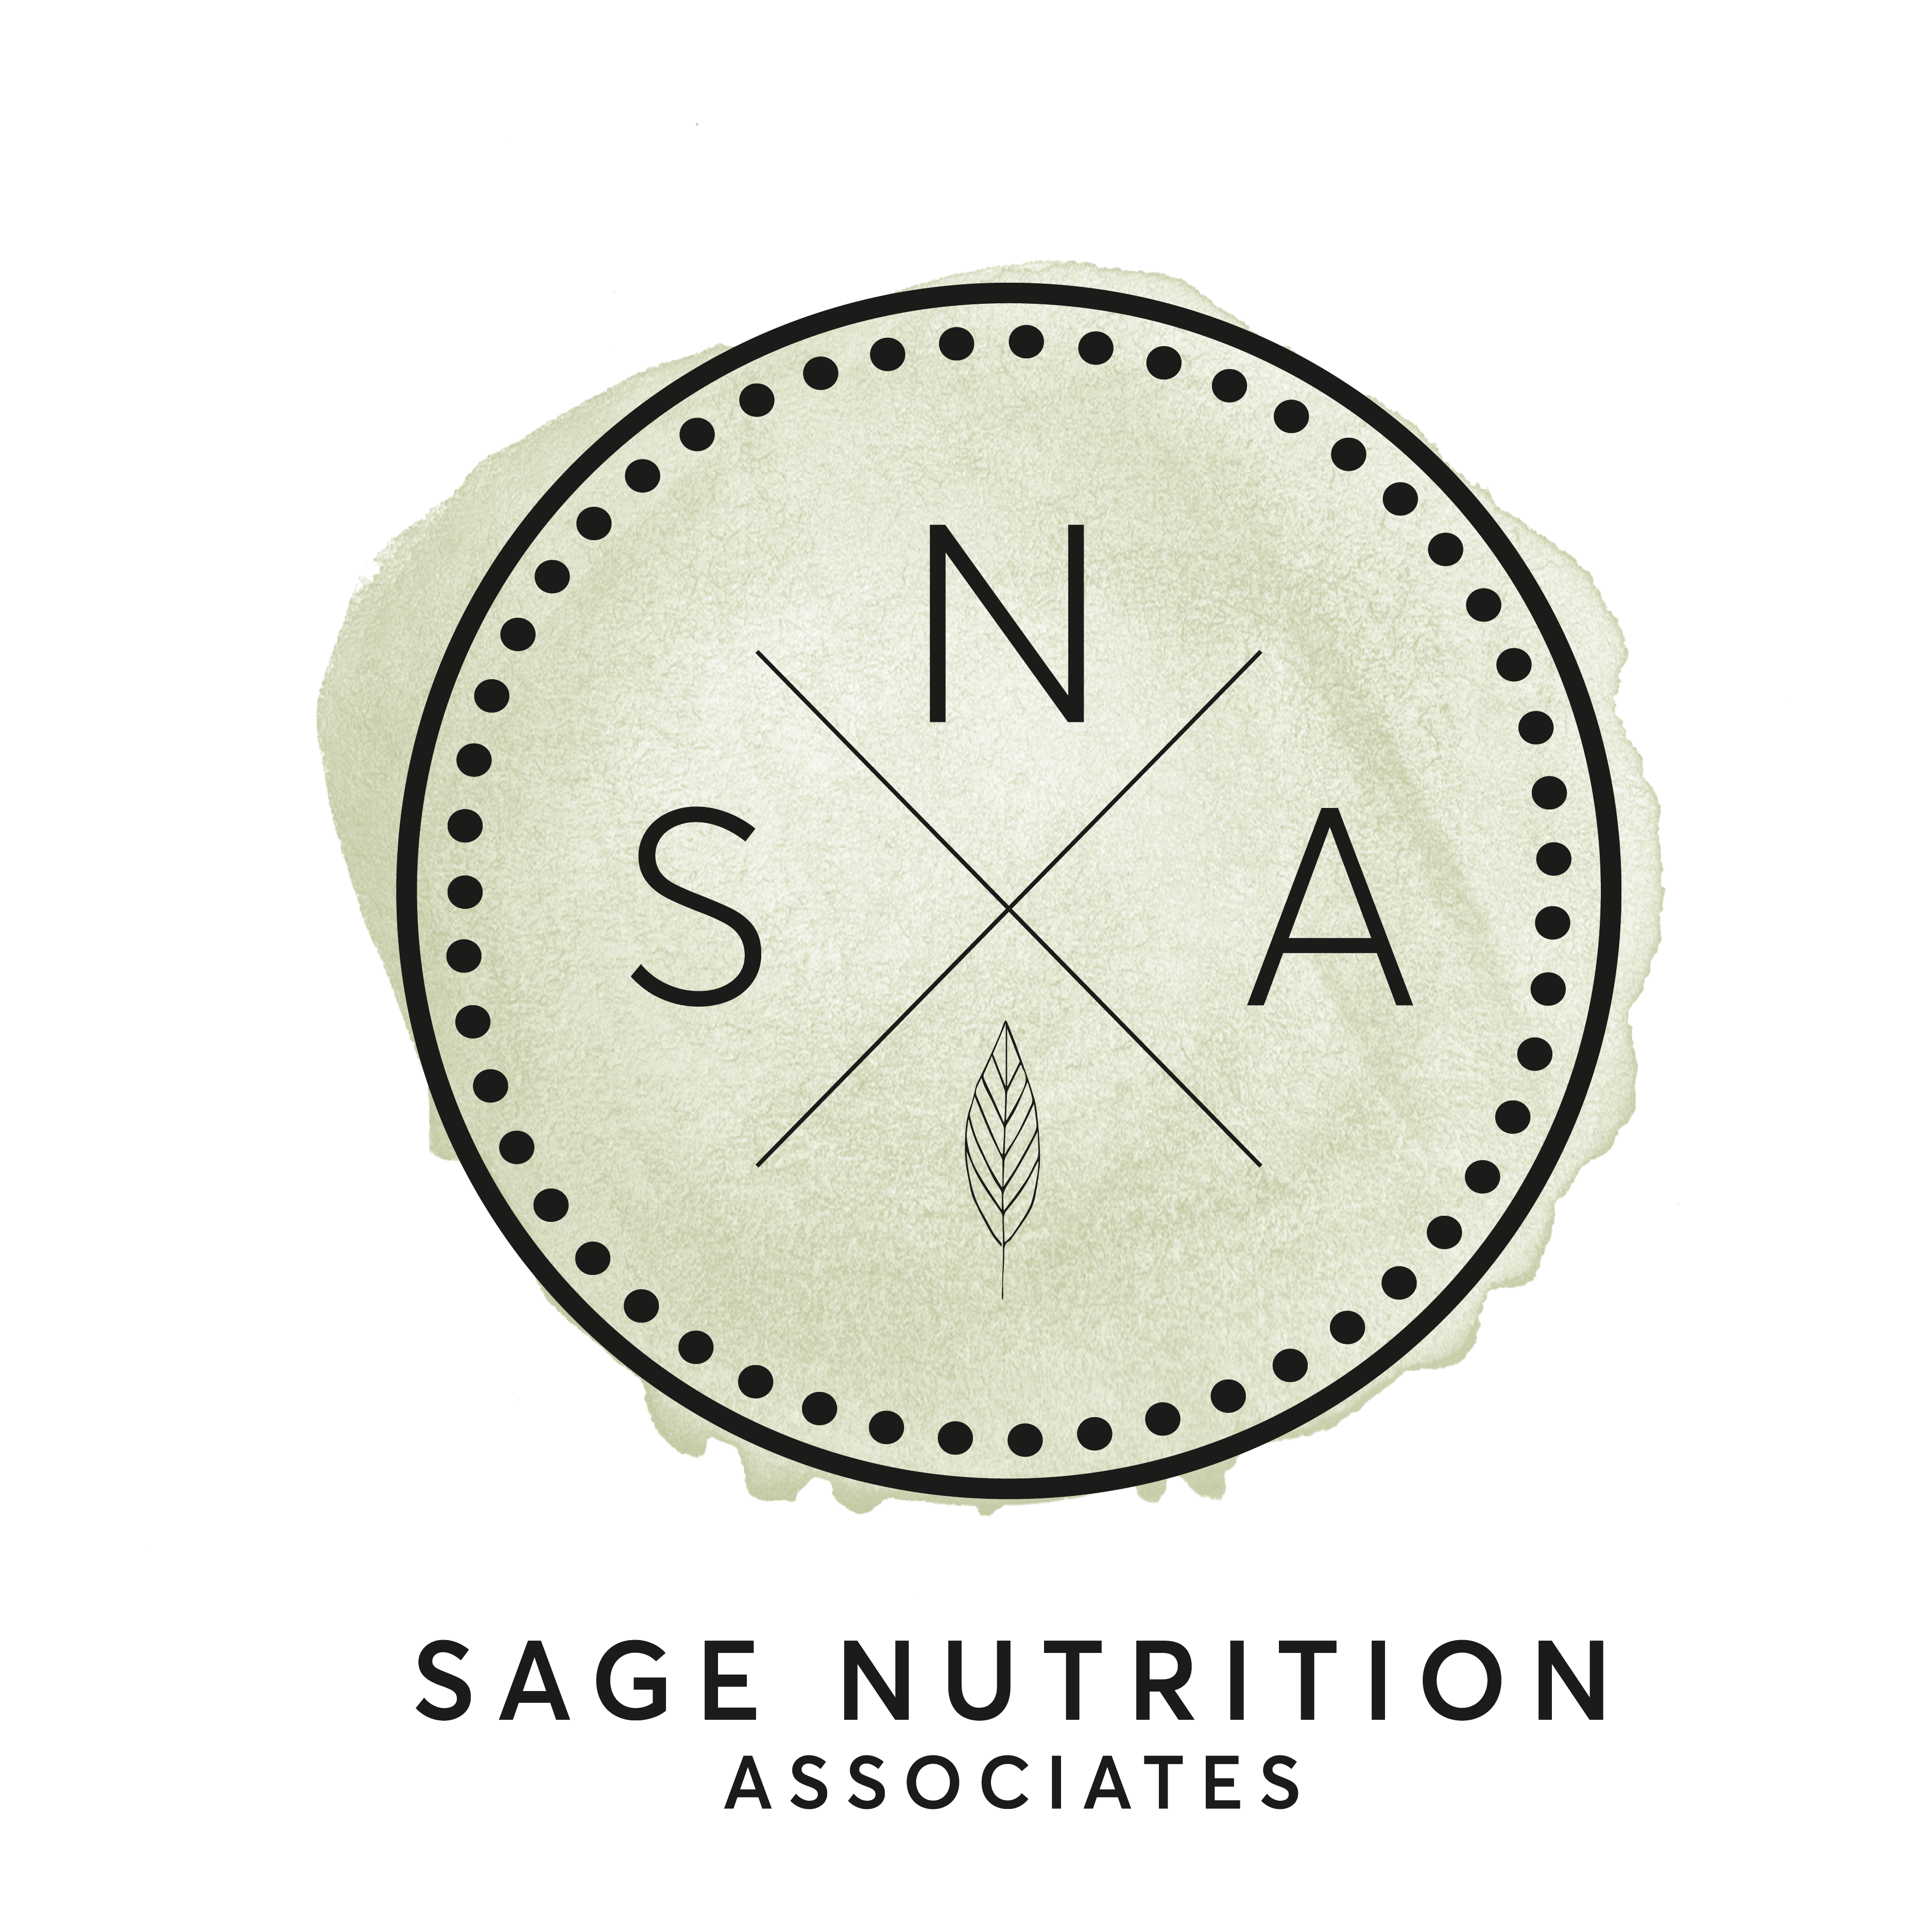 Copy of Sage Nutrition Associates - logo.design. White background